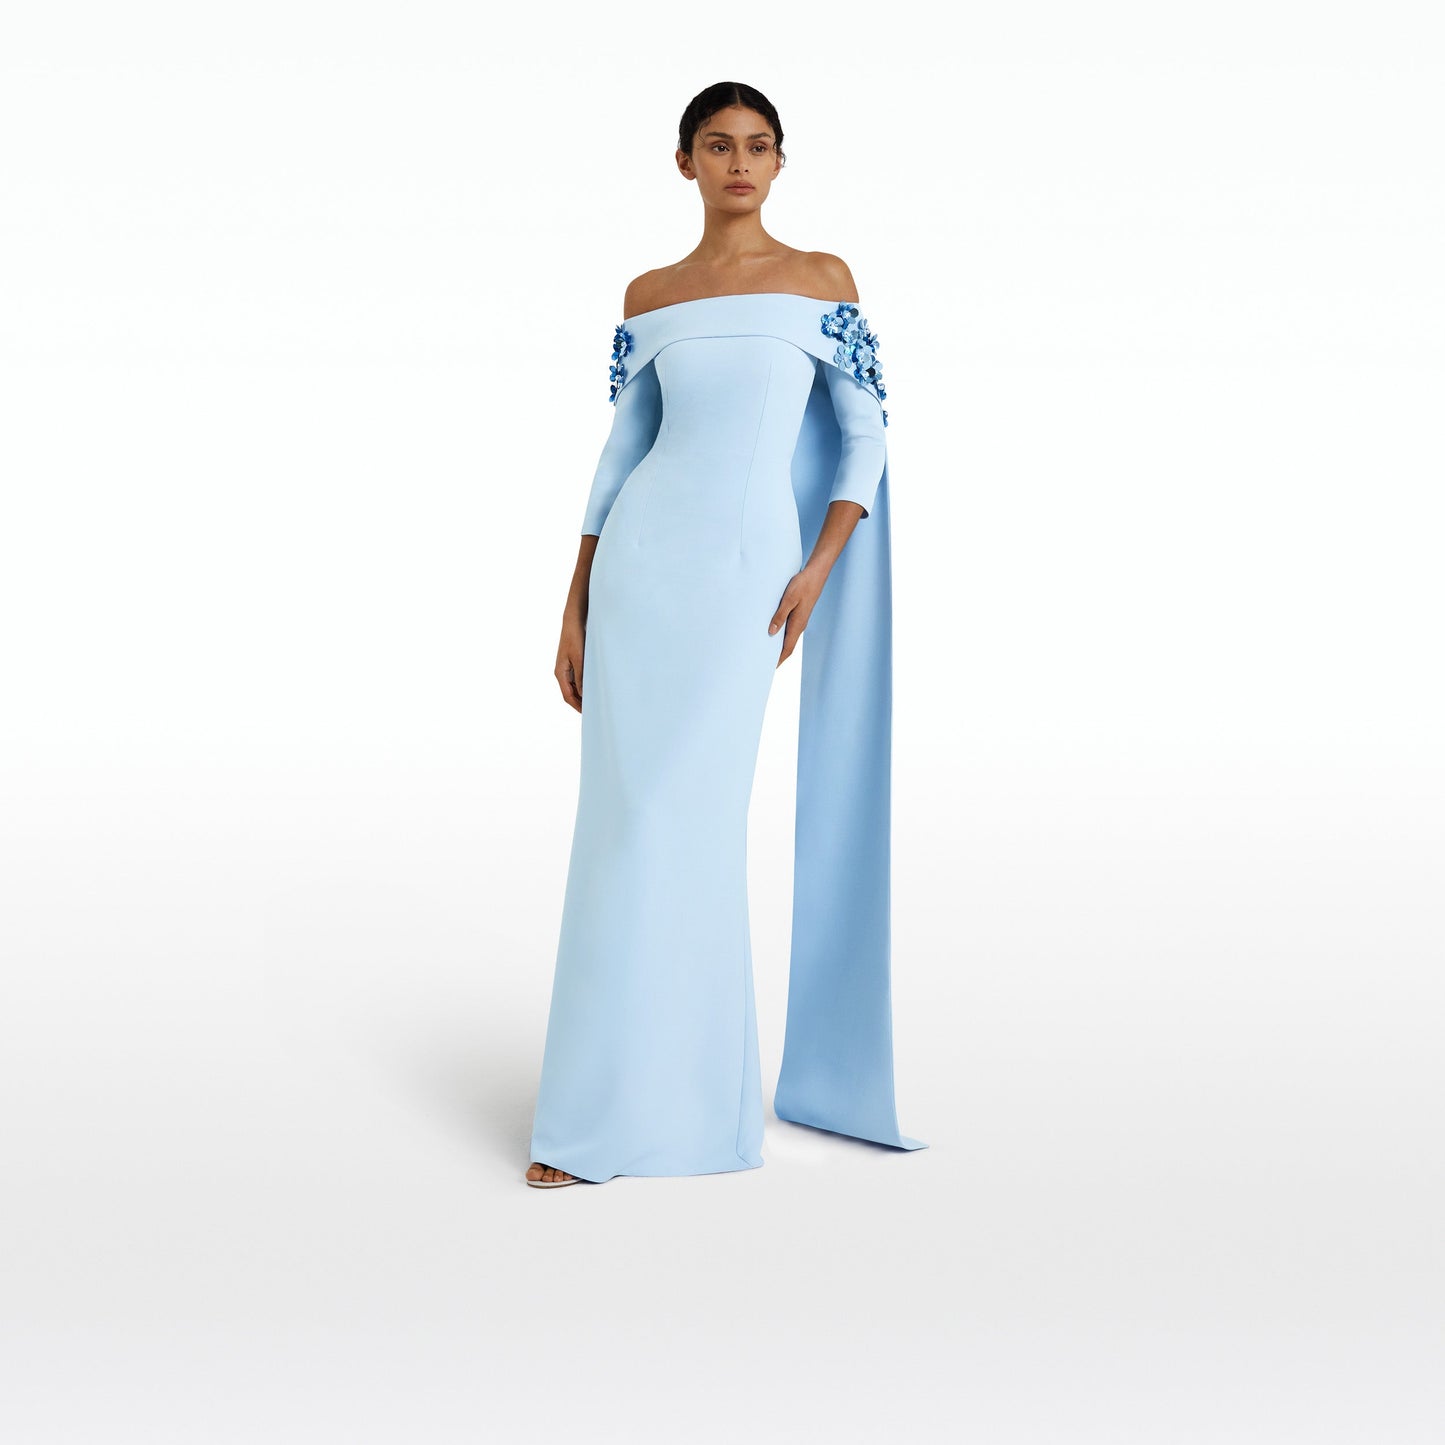 Bellara Pale Blue Harness & Soshin Dress